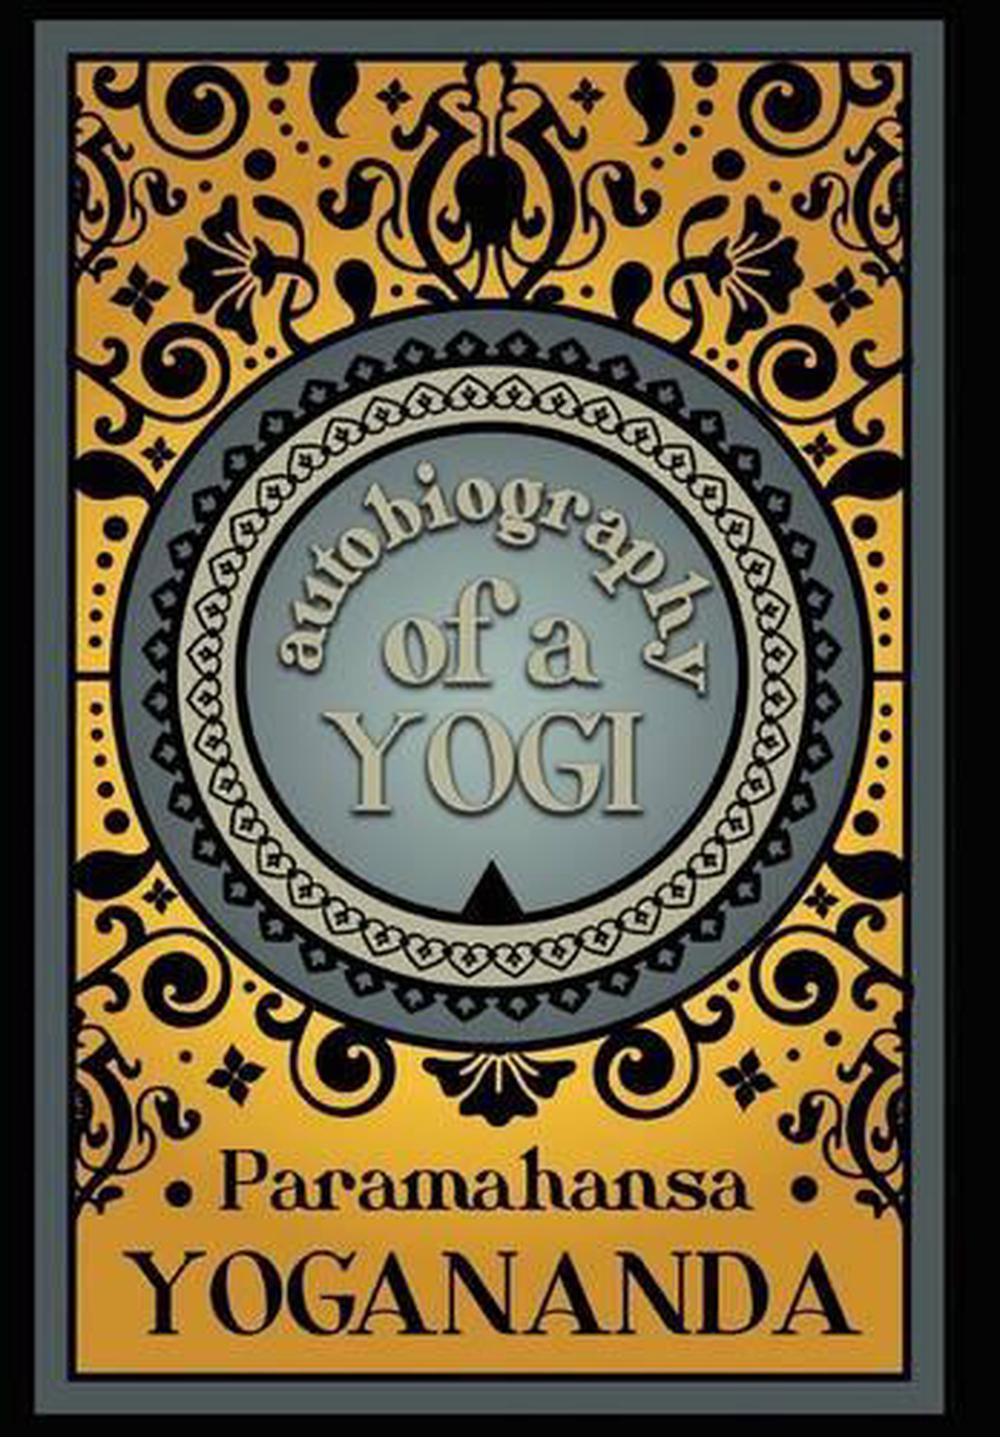 autobiography of a yogi ebook download